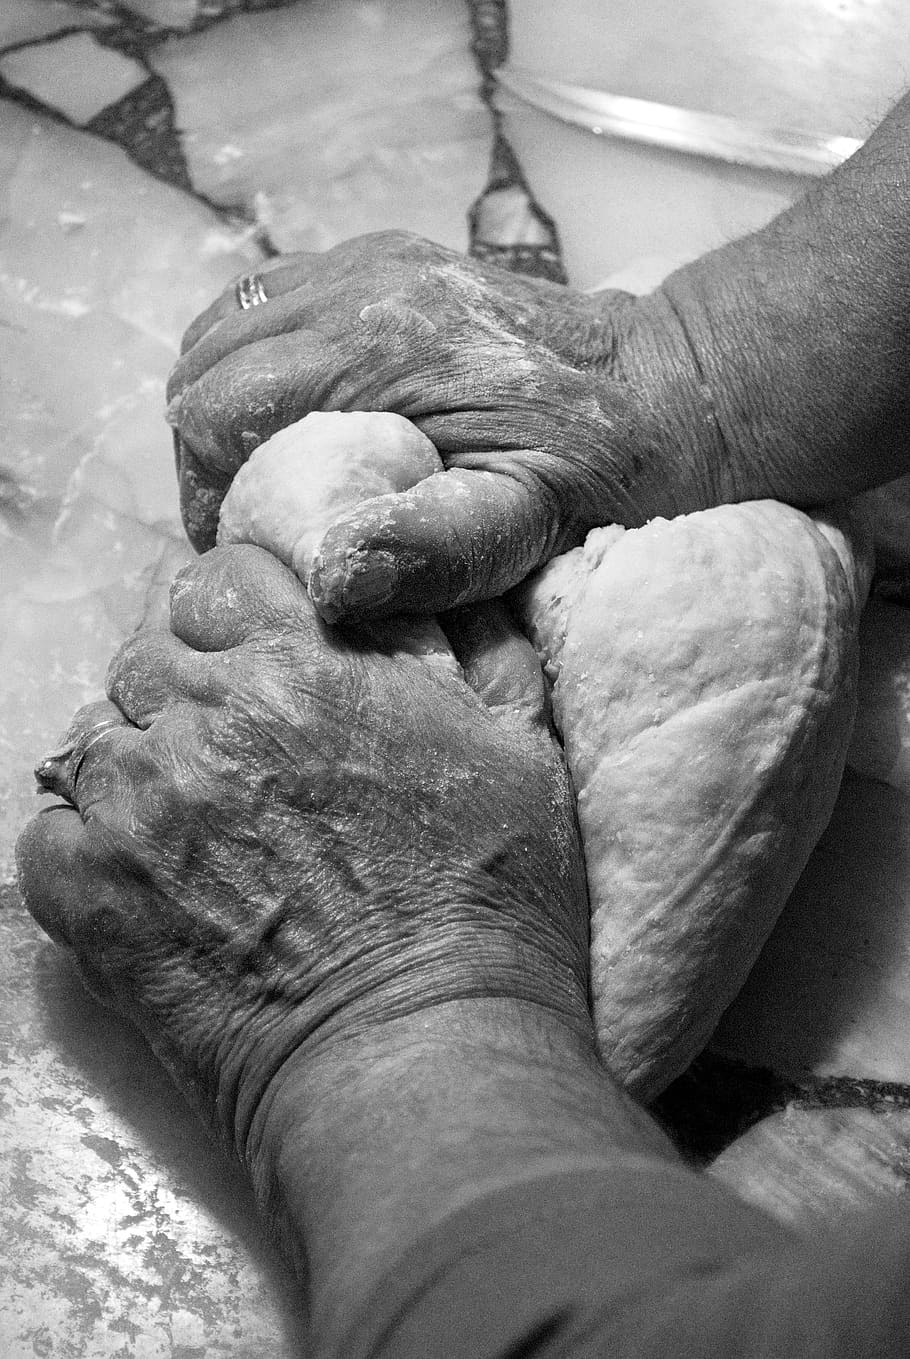 hands, mass, flour, kitchen, knead, bread, hand, work, cook, cooking